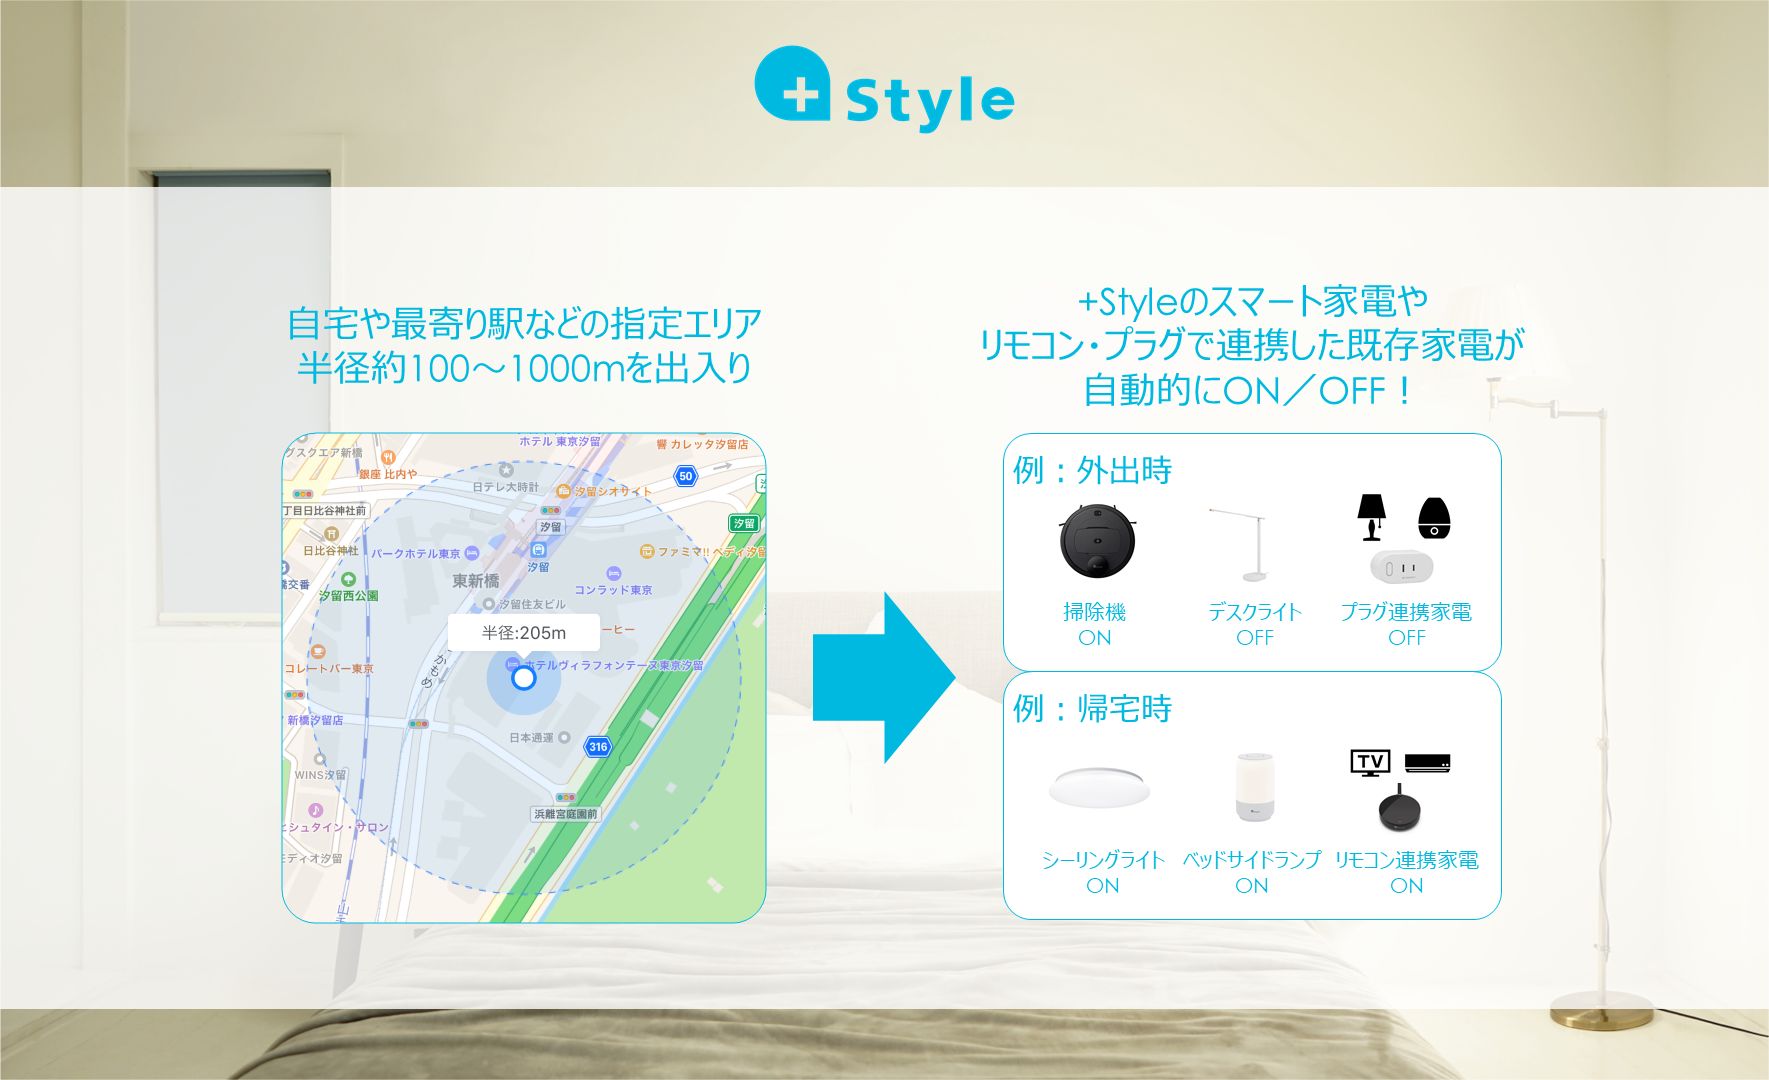 +StyleアプリにGPS連携機能が追加。外出/帰宅時に自動で家電の操作が可能に